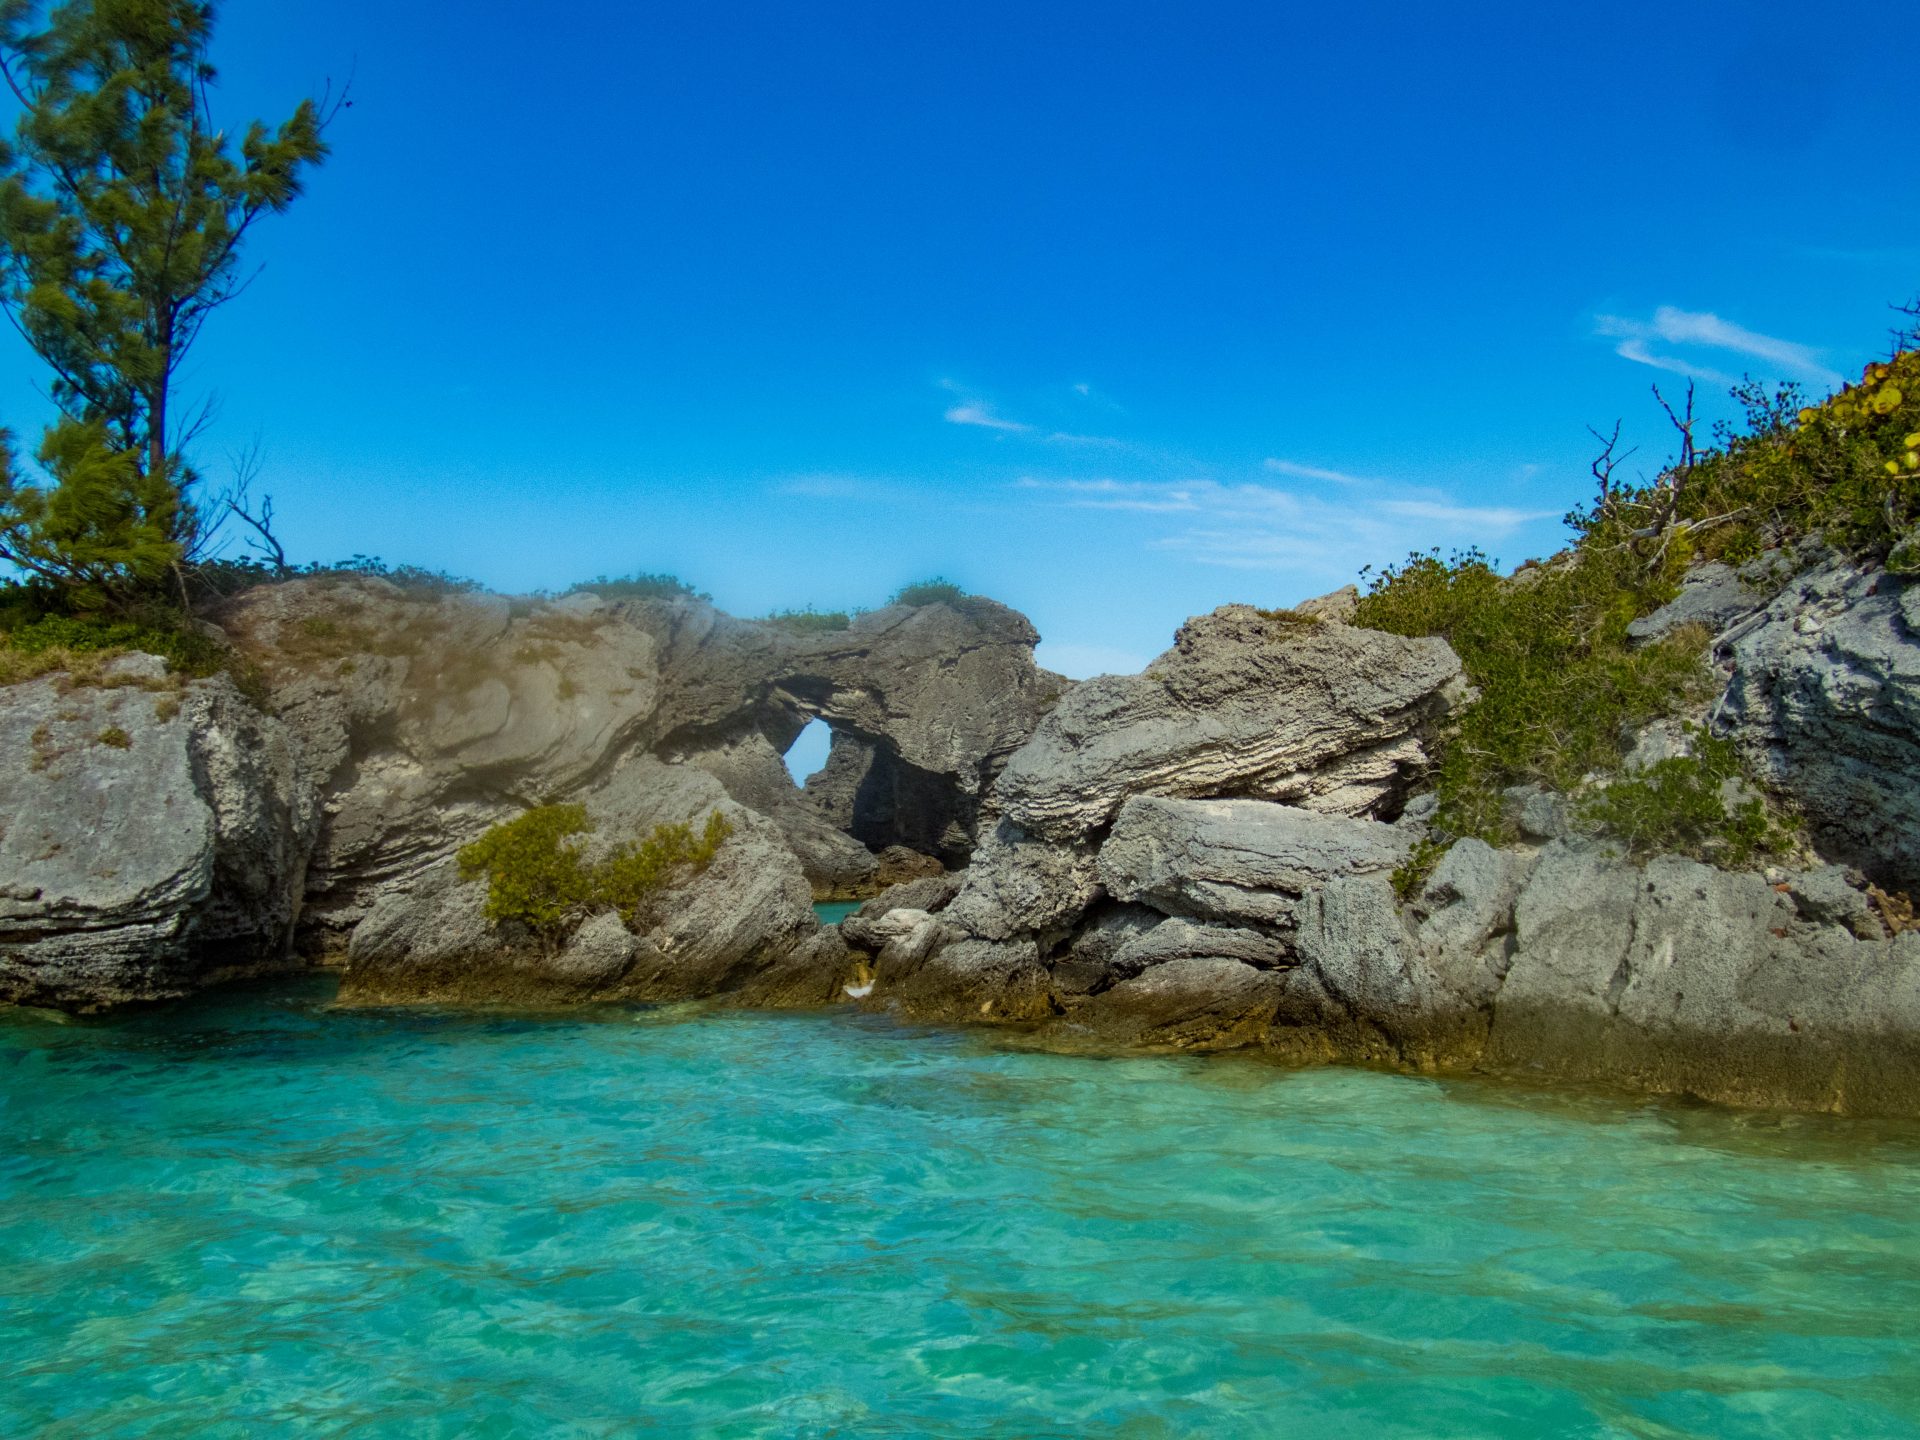 Stunning grey rocks frame emerald blue waters in a Bermuda cove - Boating in Bermuda